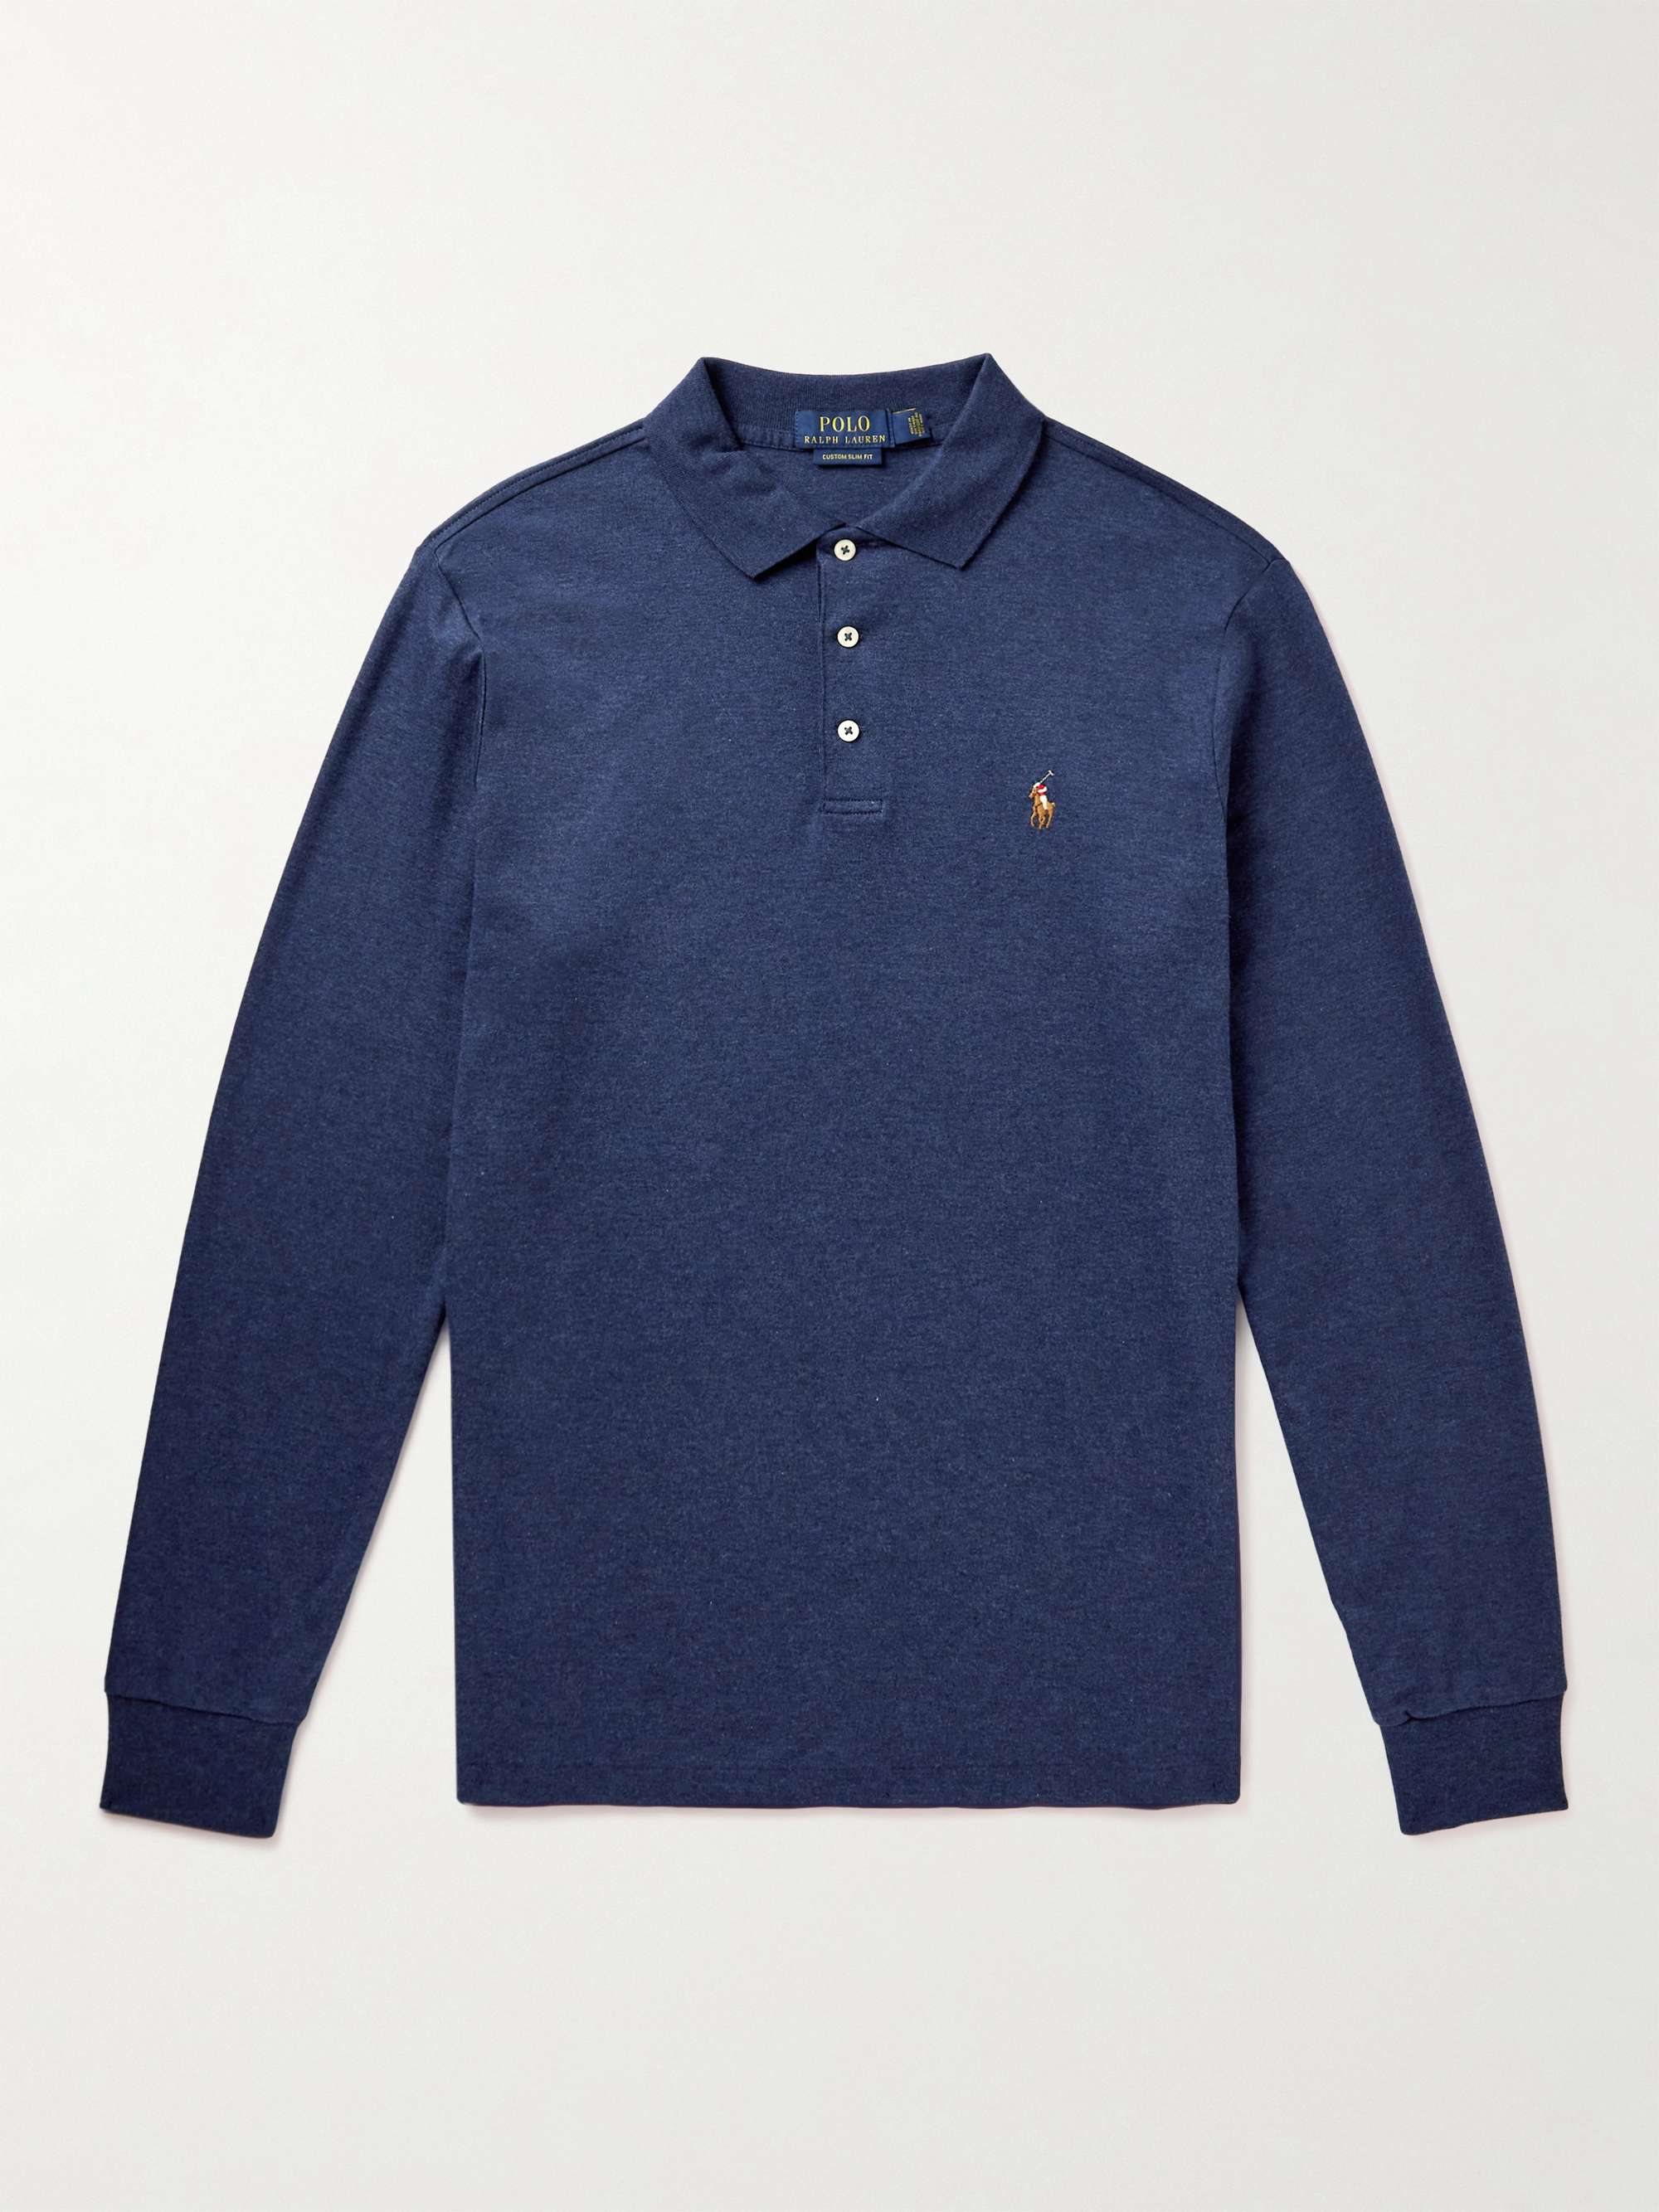 Navy Logo-Embroidered Cotton-Jersey Polo Shirt | POLO RALPH LAUREN | MR  PORTER